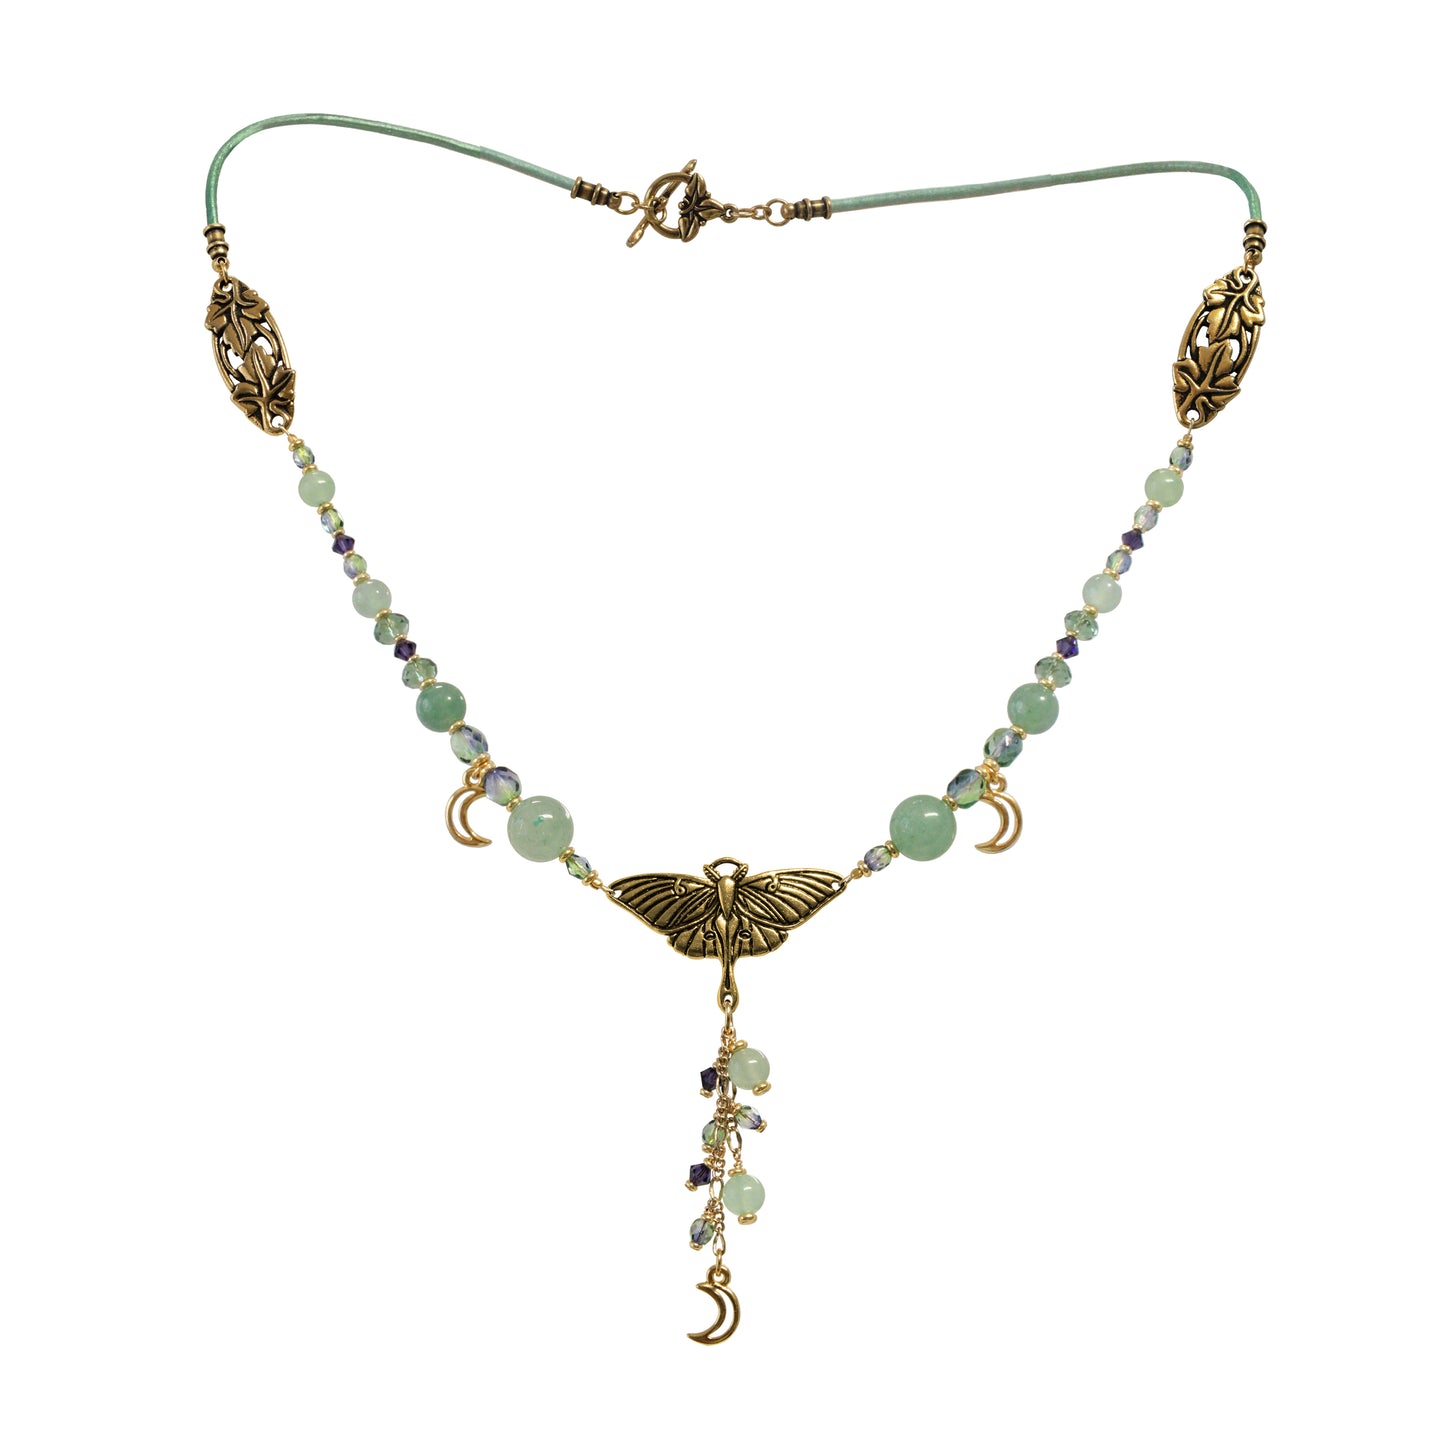 Luna Moth Necklace / 22 Inch length / with aventurine gemstones / toggle clasp